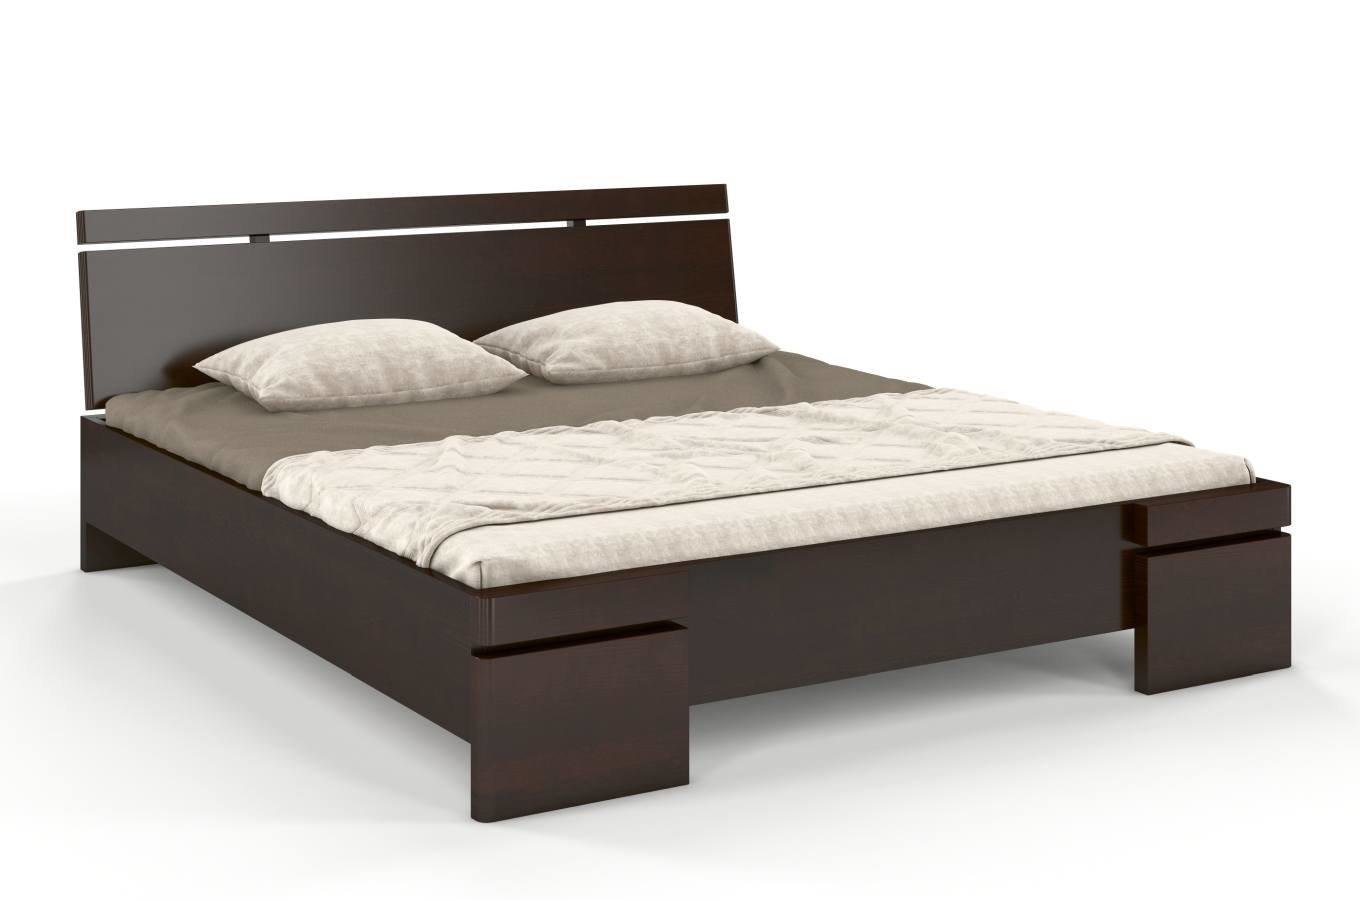 Łóżko drewniane sosnowe Skandica SPARTA Maxi & Long / 160x220 cm, kolor palisander